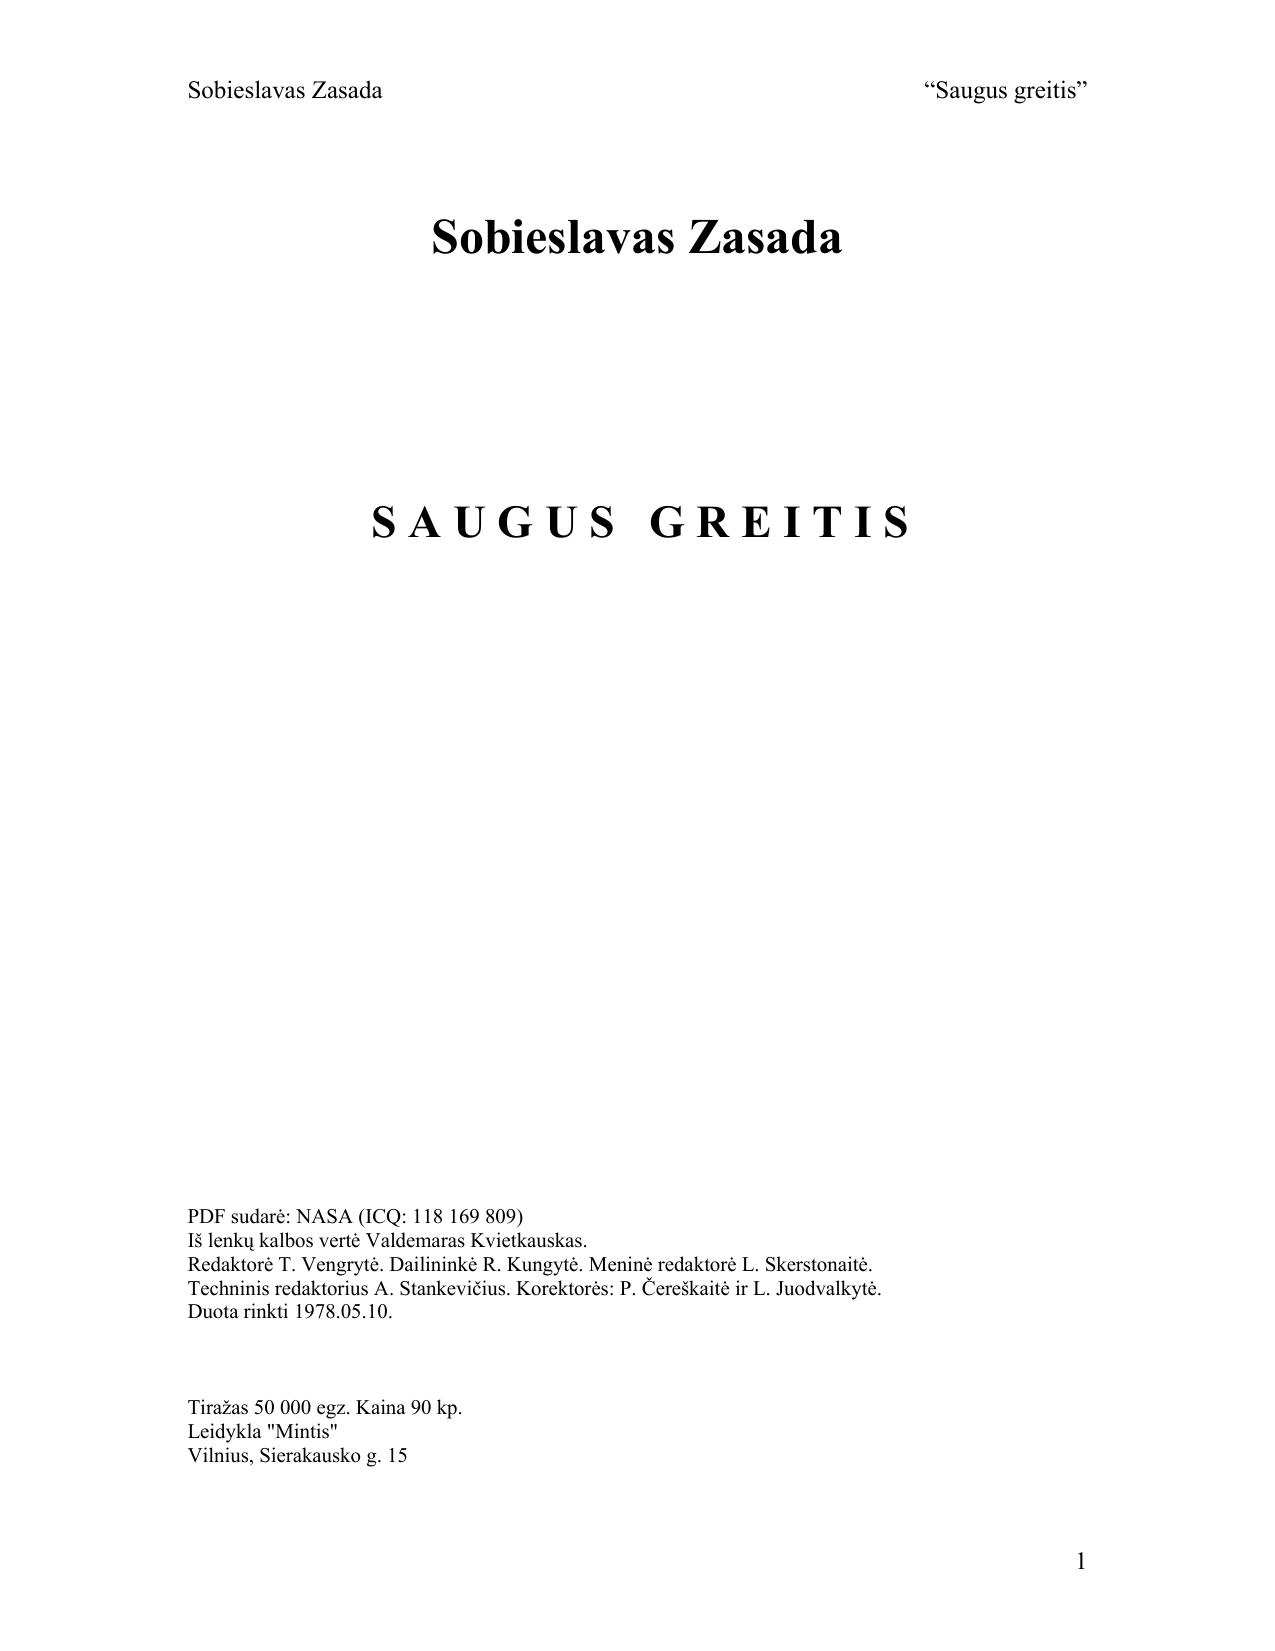 Microsoft Word - Sobieslavas Zasada - Saugus Greitis.doc